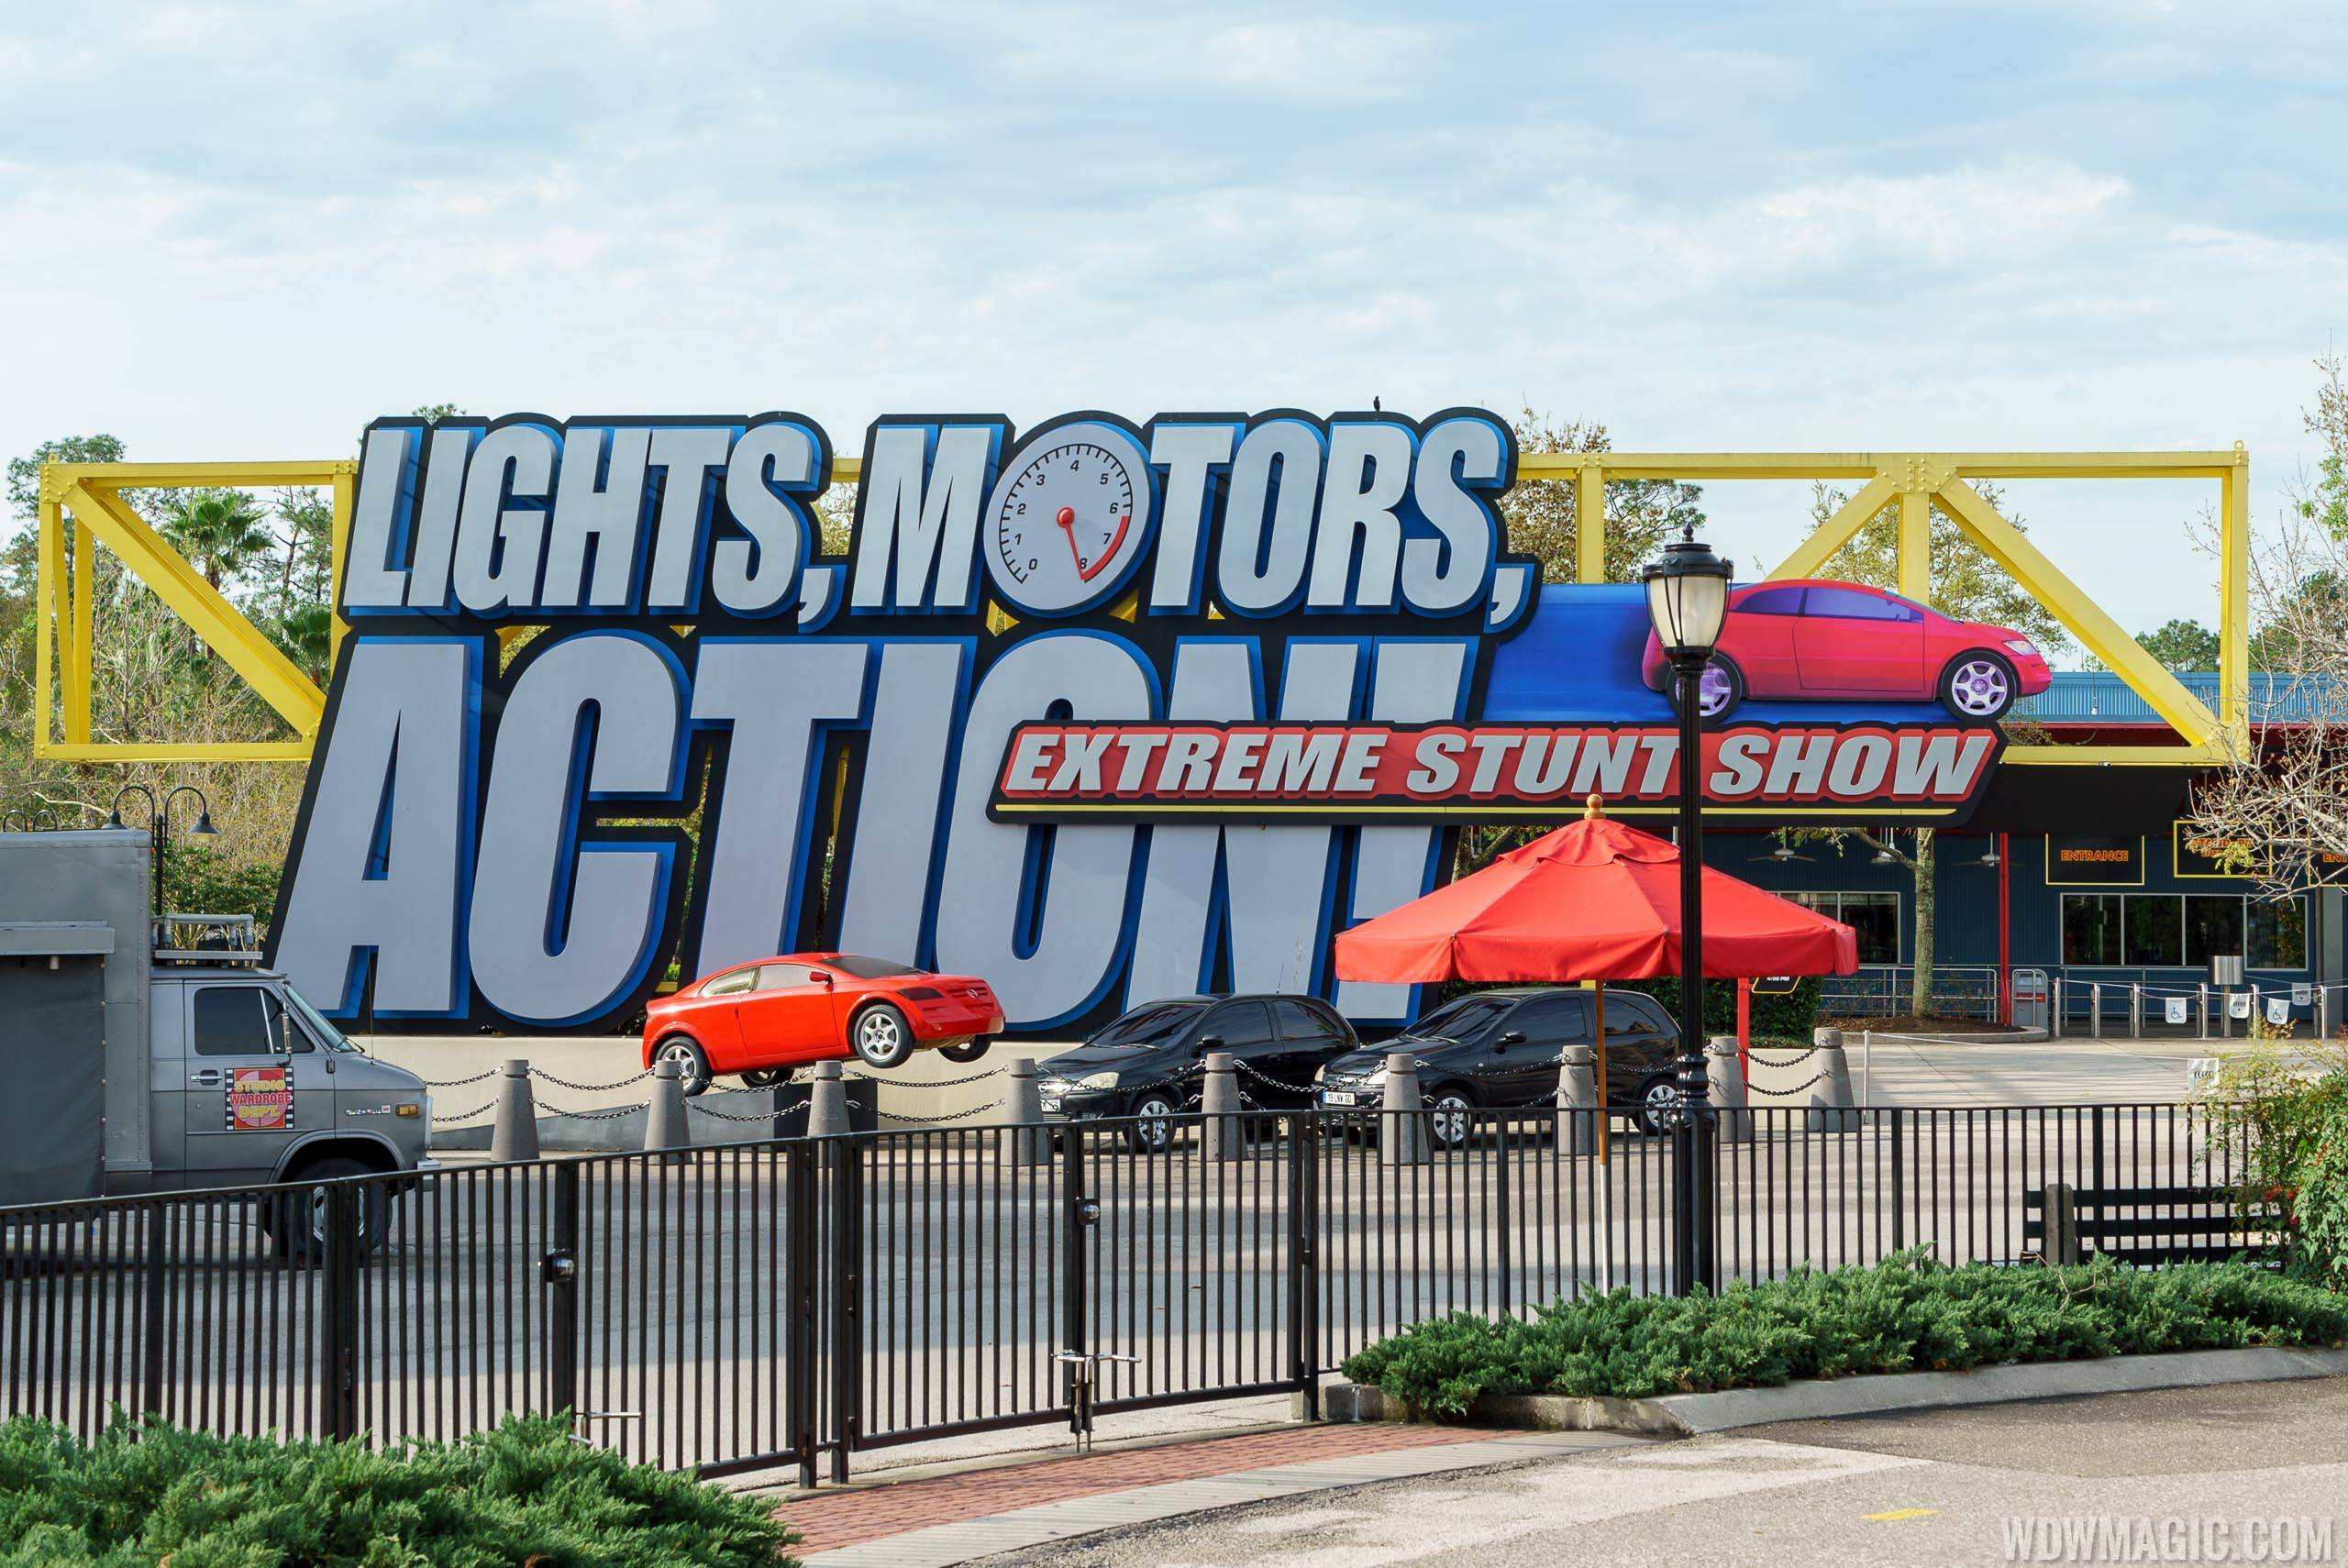 Lights, Motors, Action! Extreme Stunt Show - Show